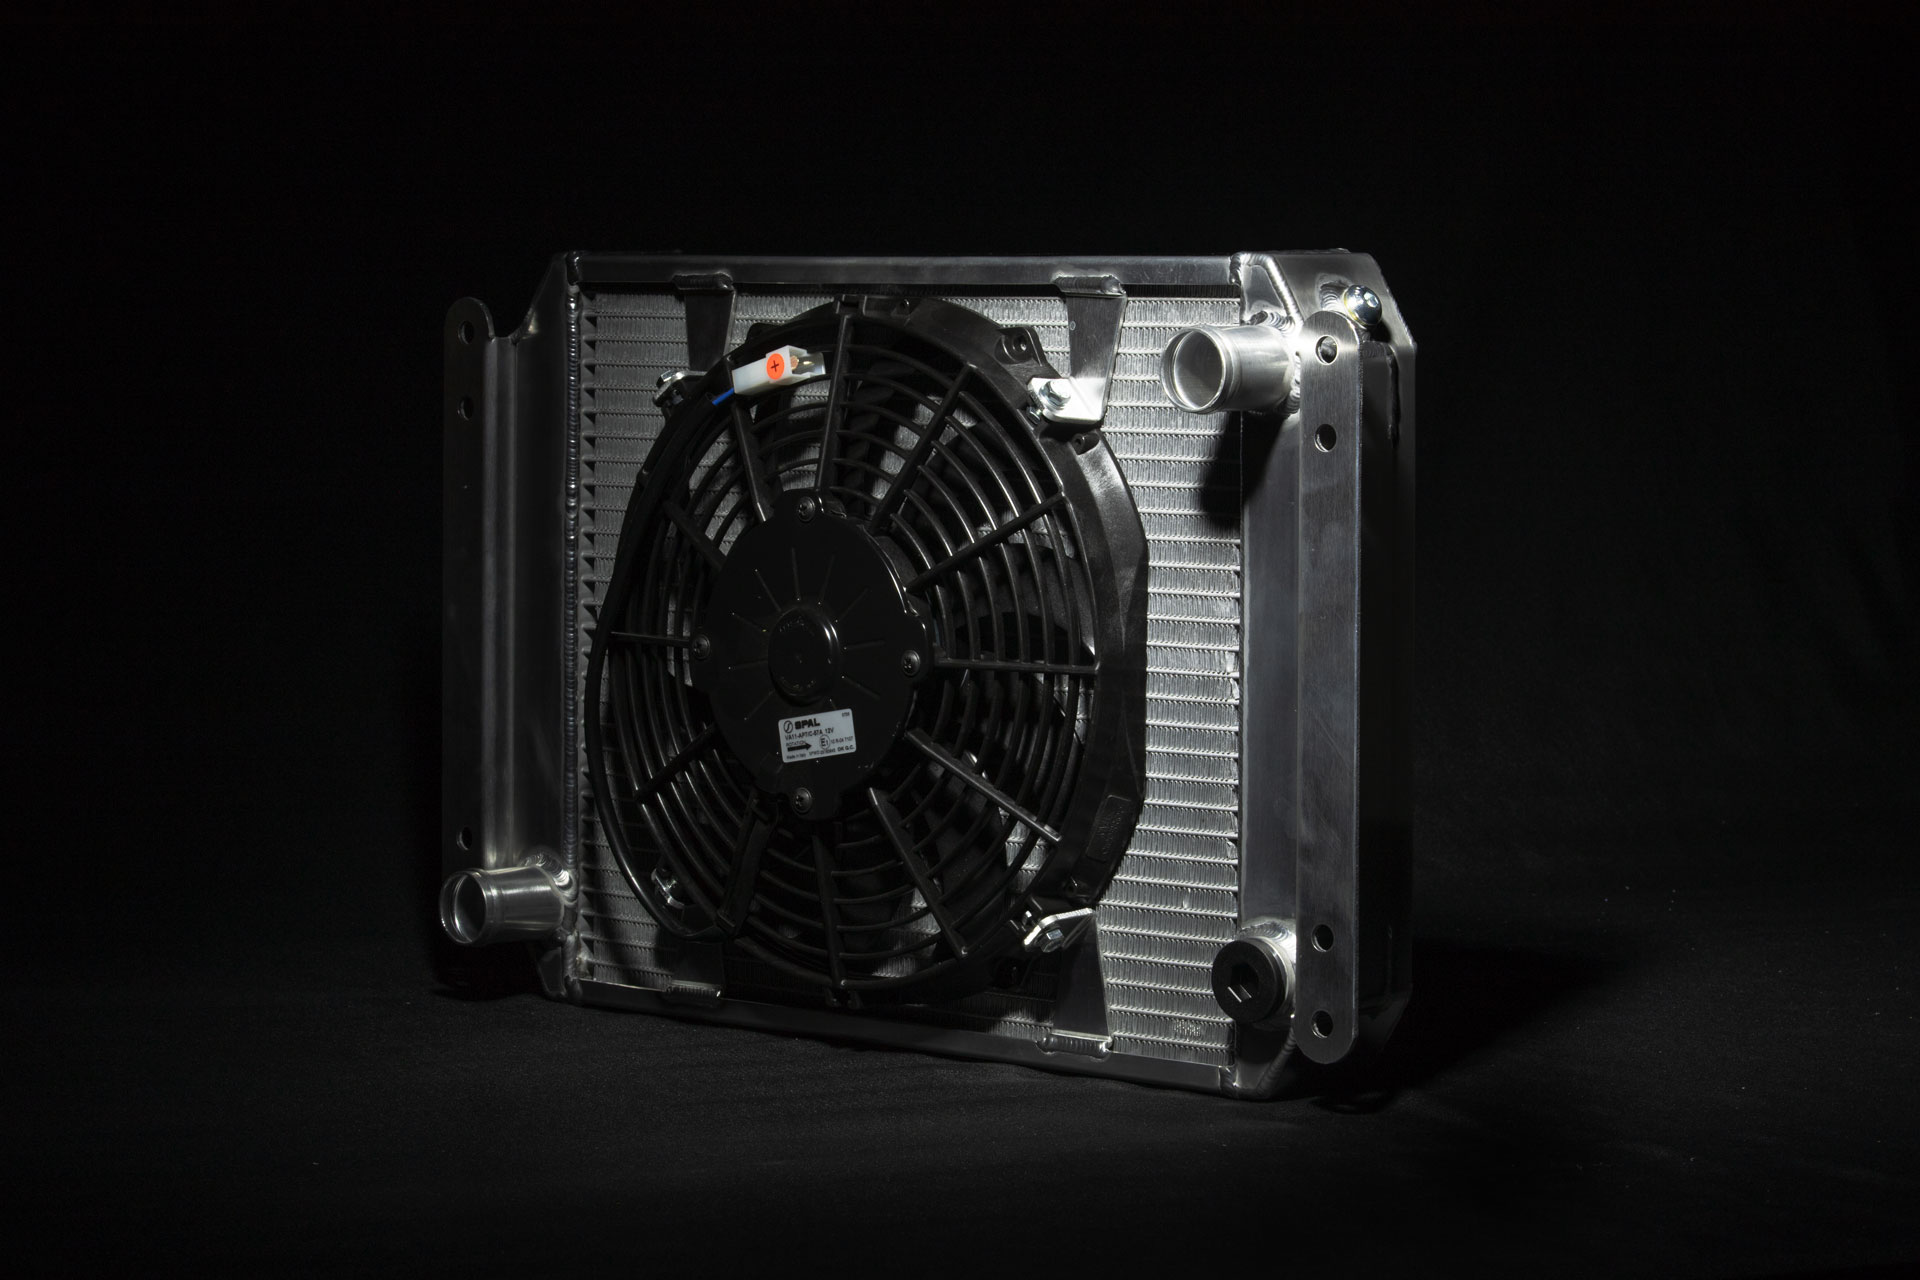 Auto-Aluminium-Kühler Für Motorkühlung Stockbild - Bild von